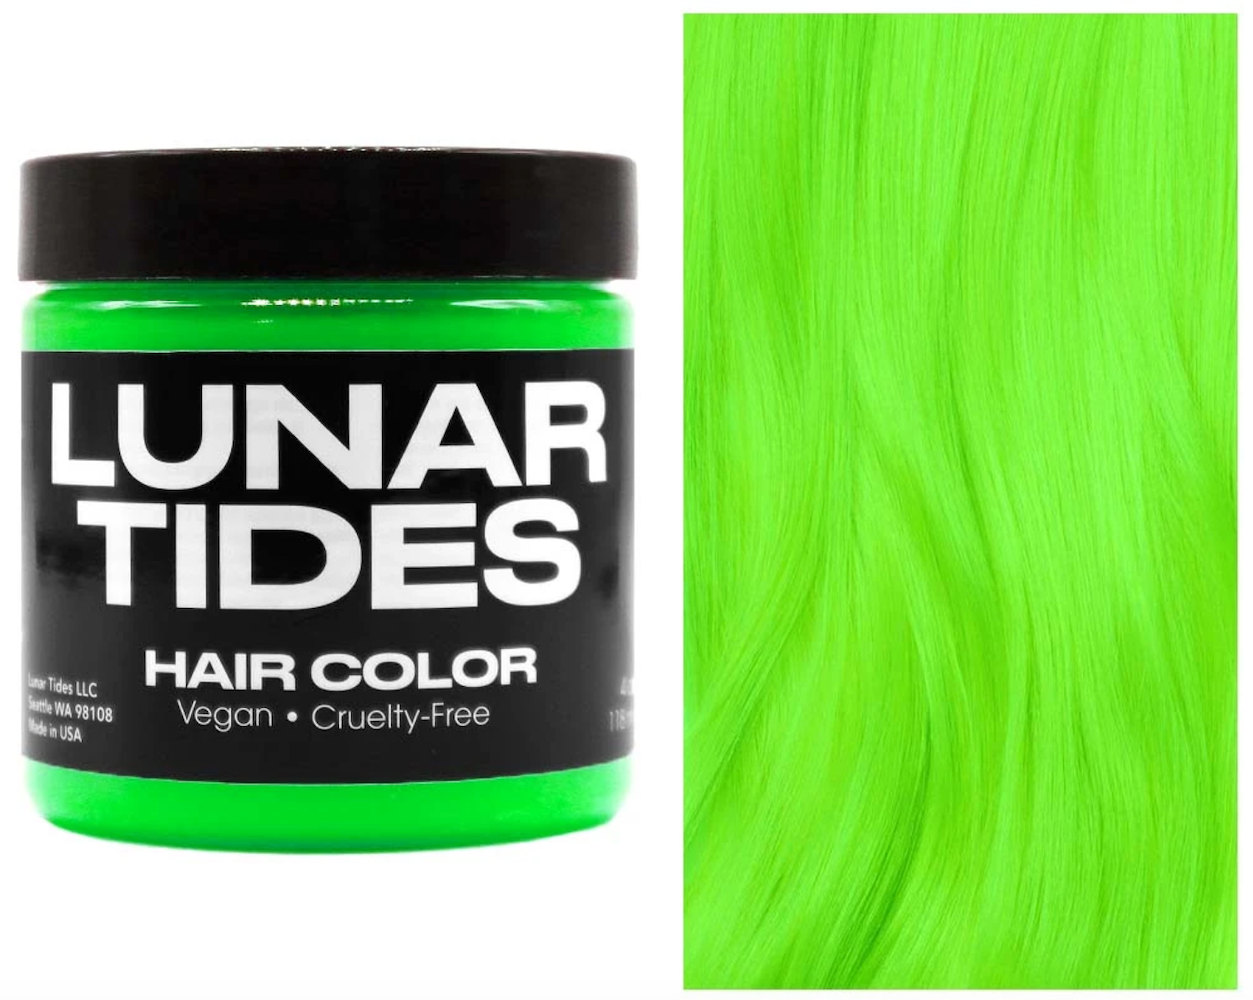 Lunar Tides Hair Dye - Neon lime, a neon green jar of hair dye. Example of green hair.